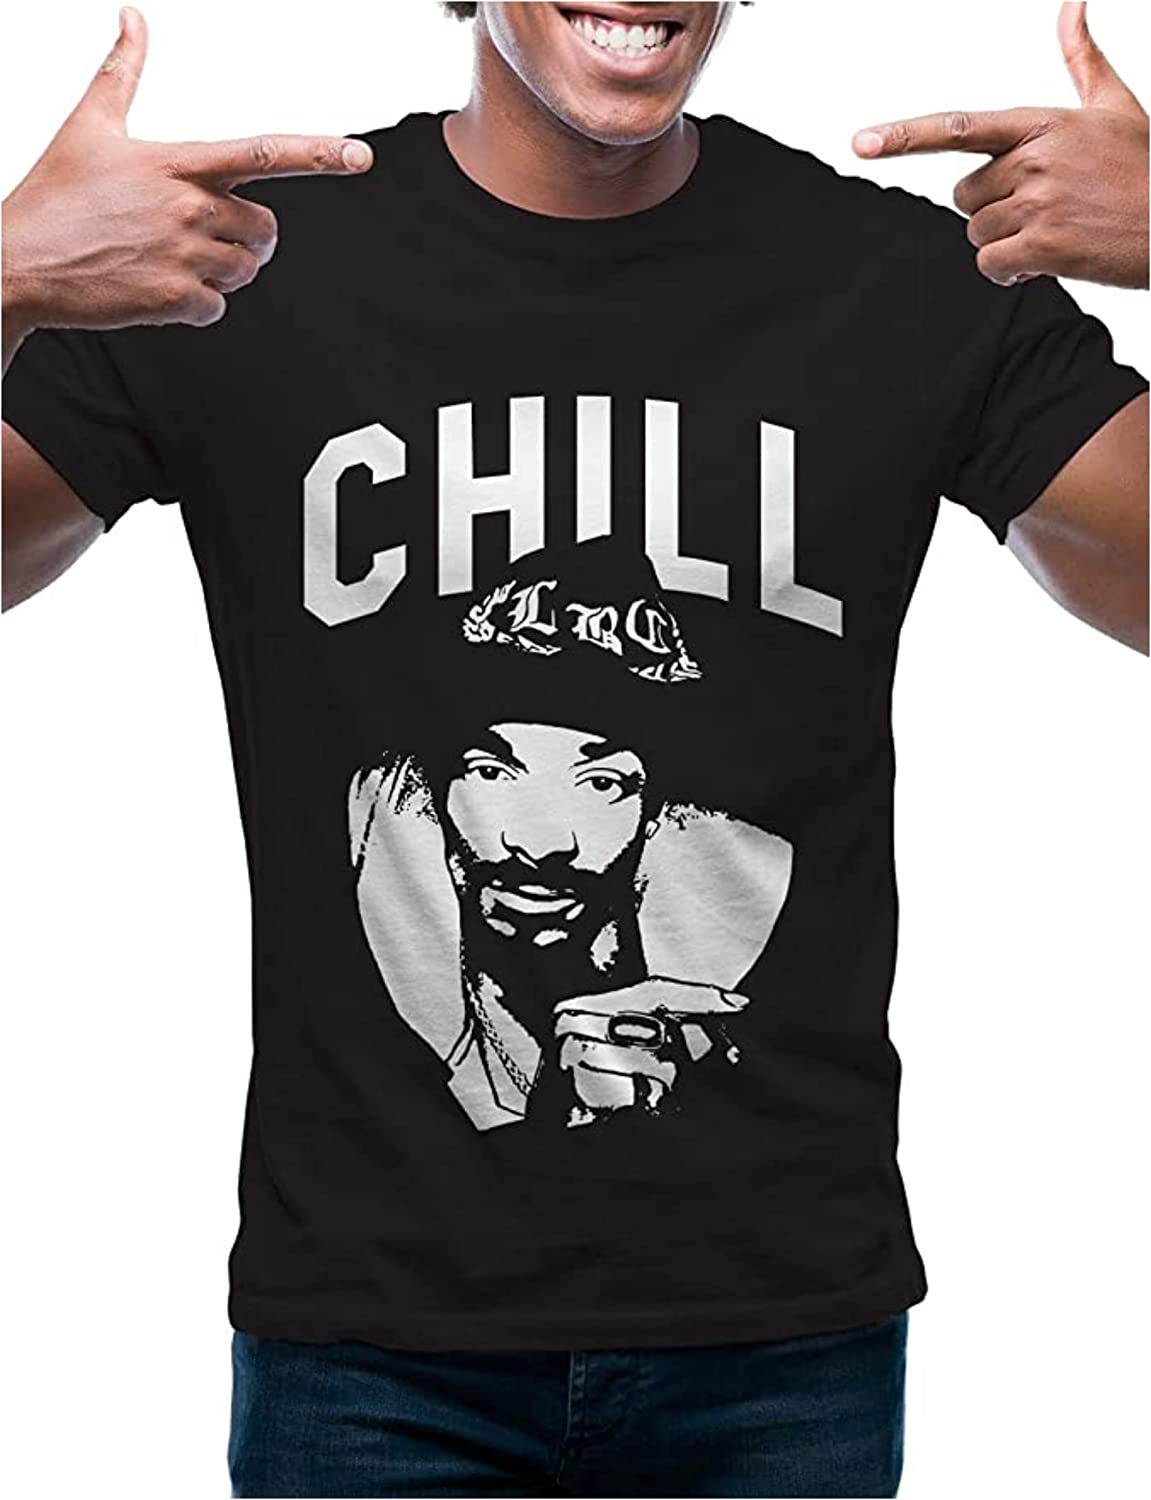 Snoop Dogg Graphic Tee DZT09